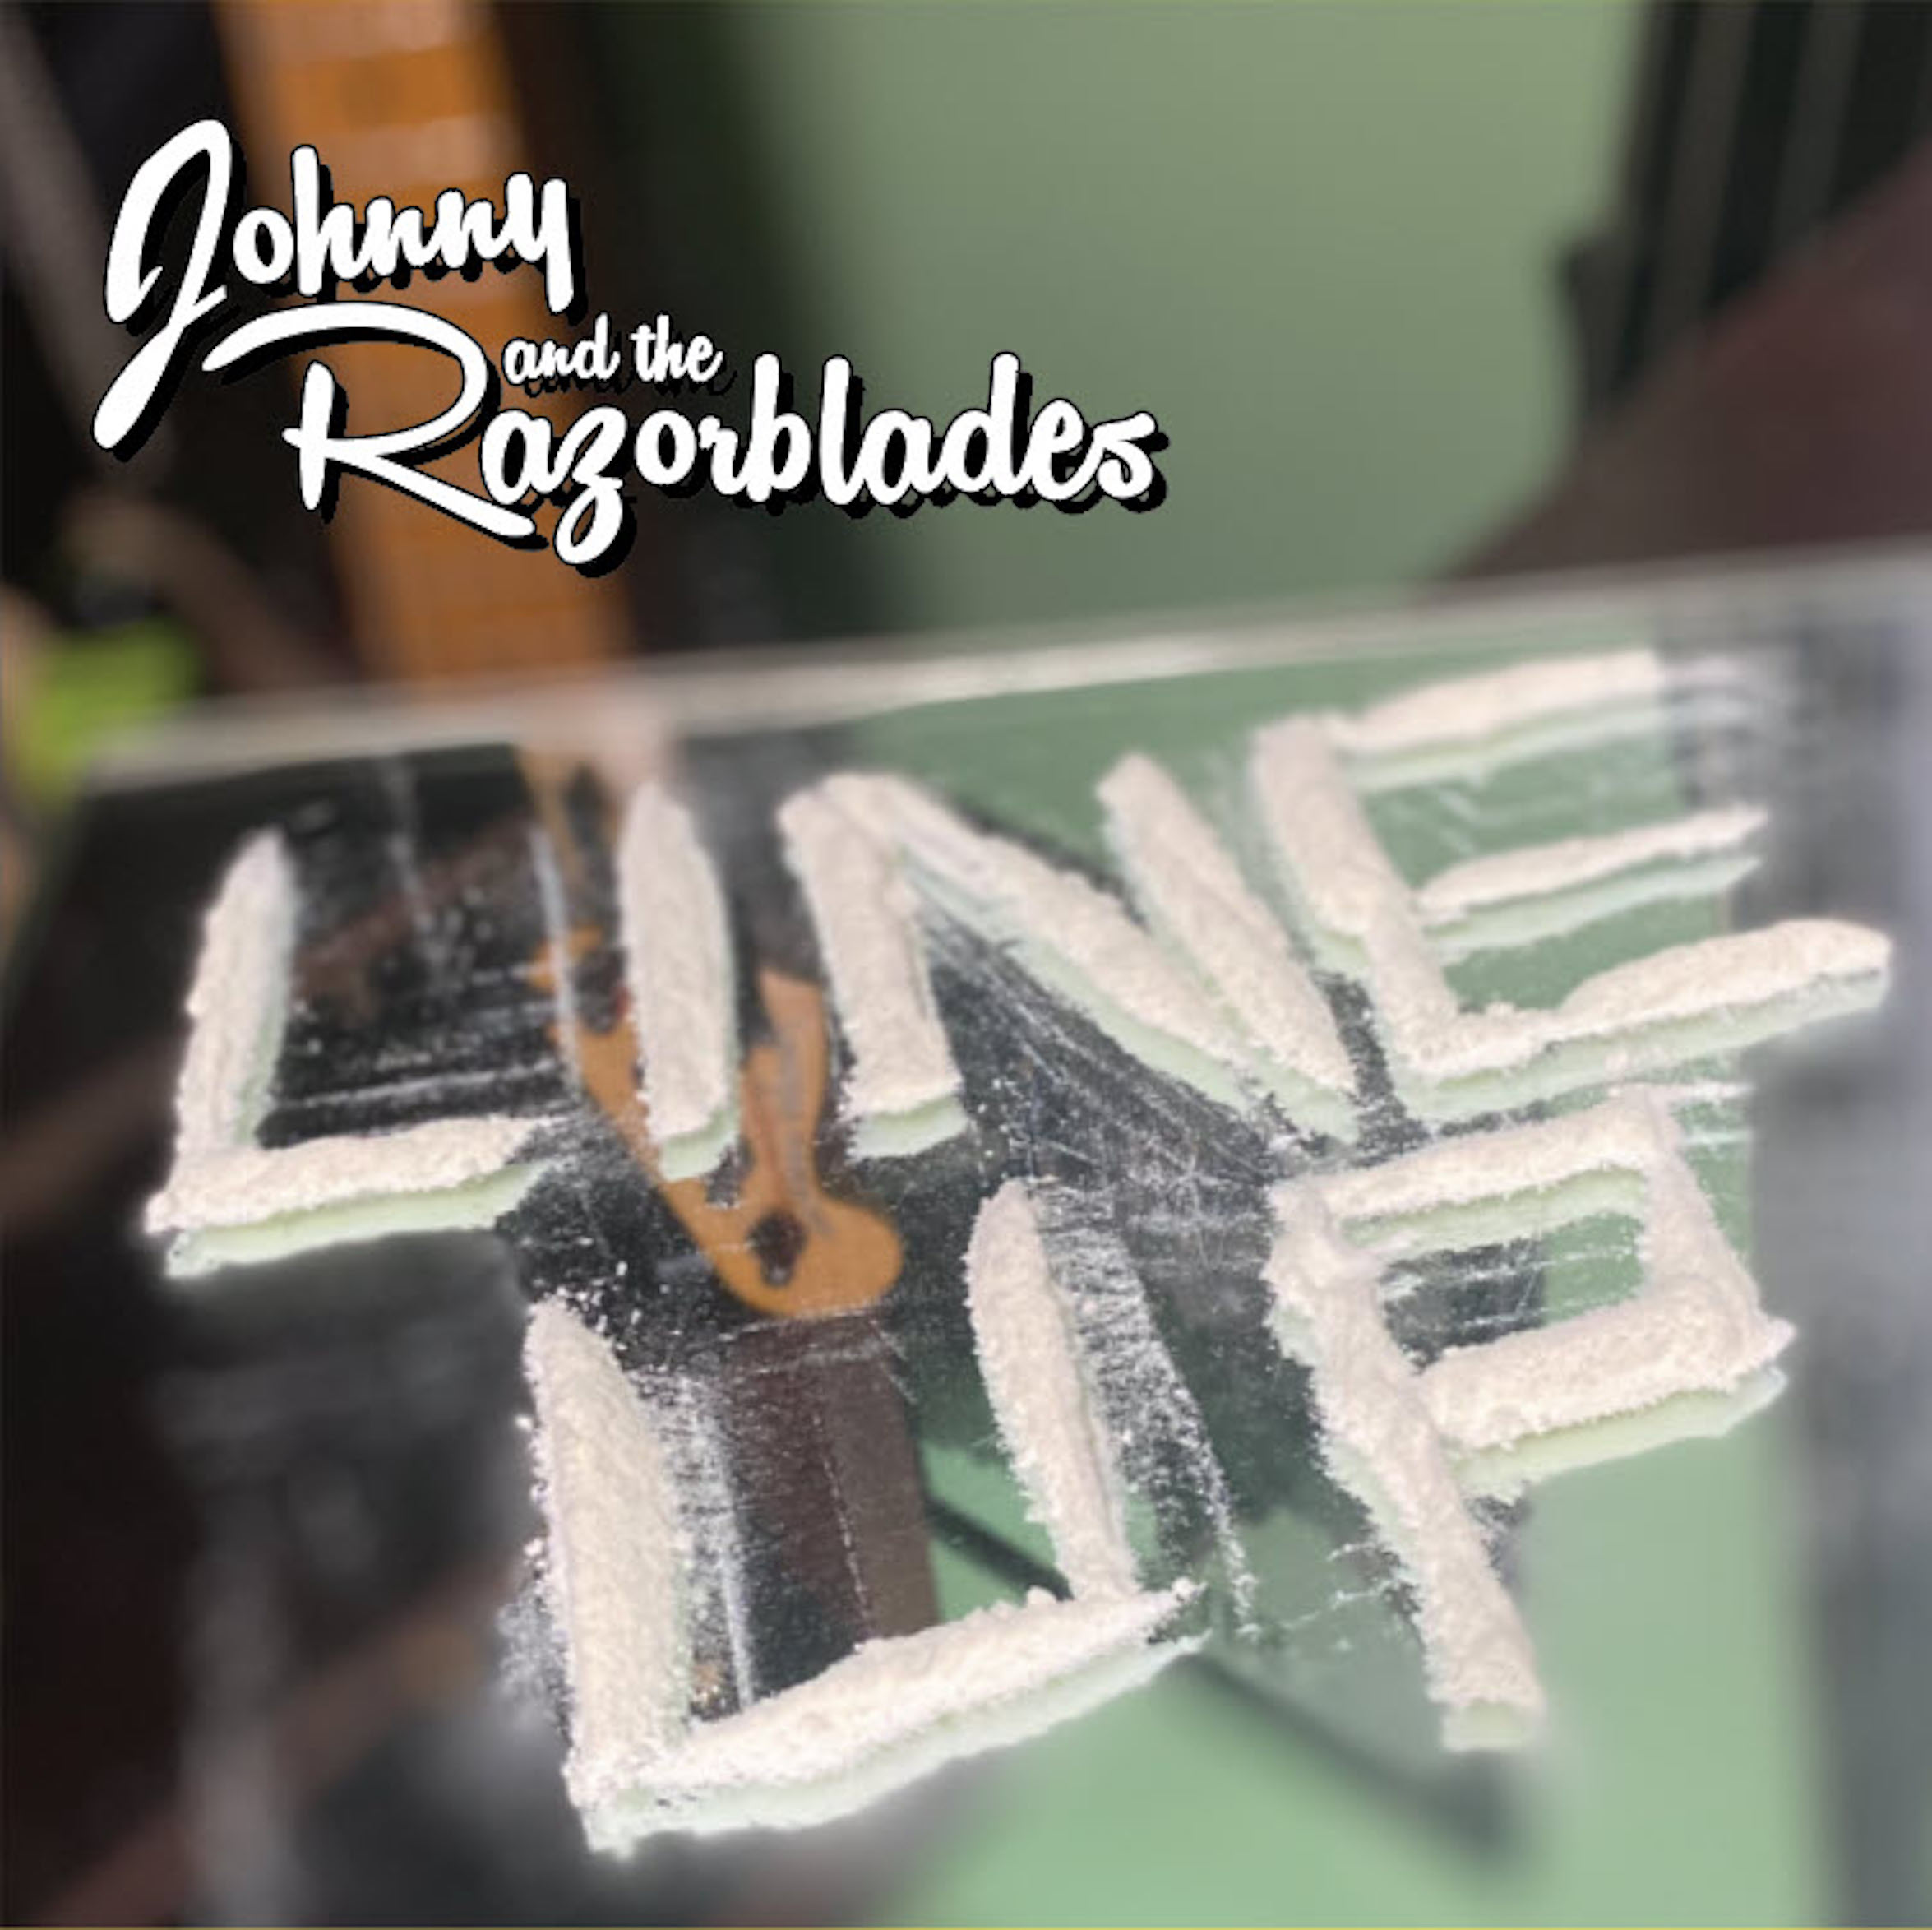 Johnny and the Razorblades